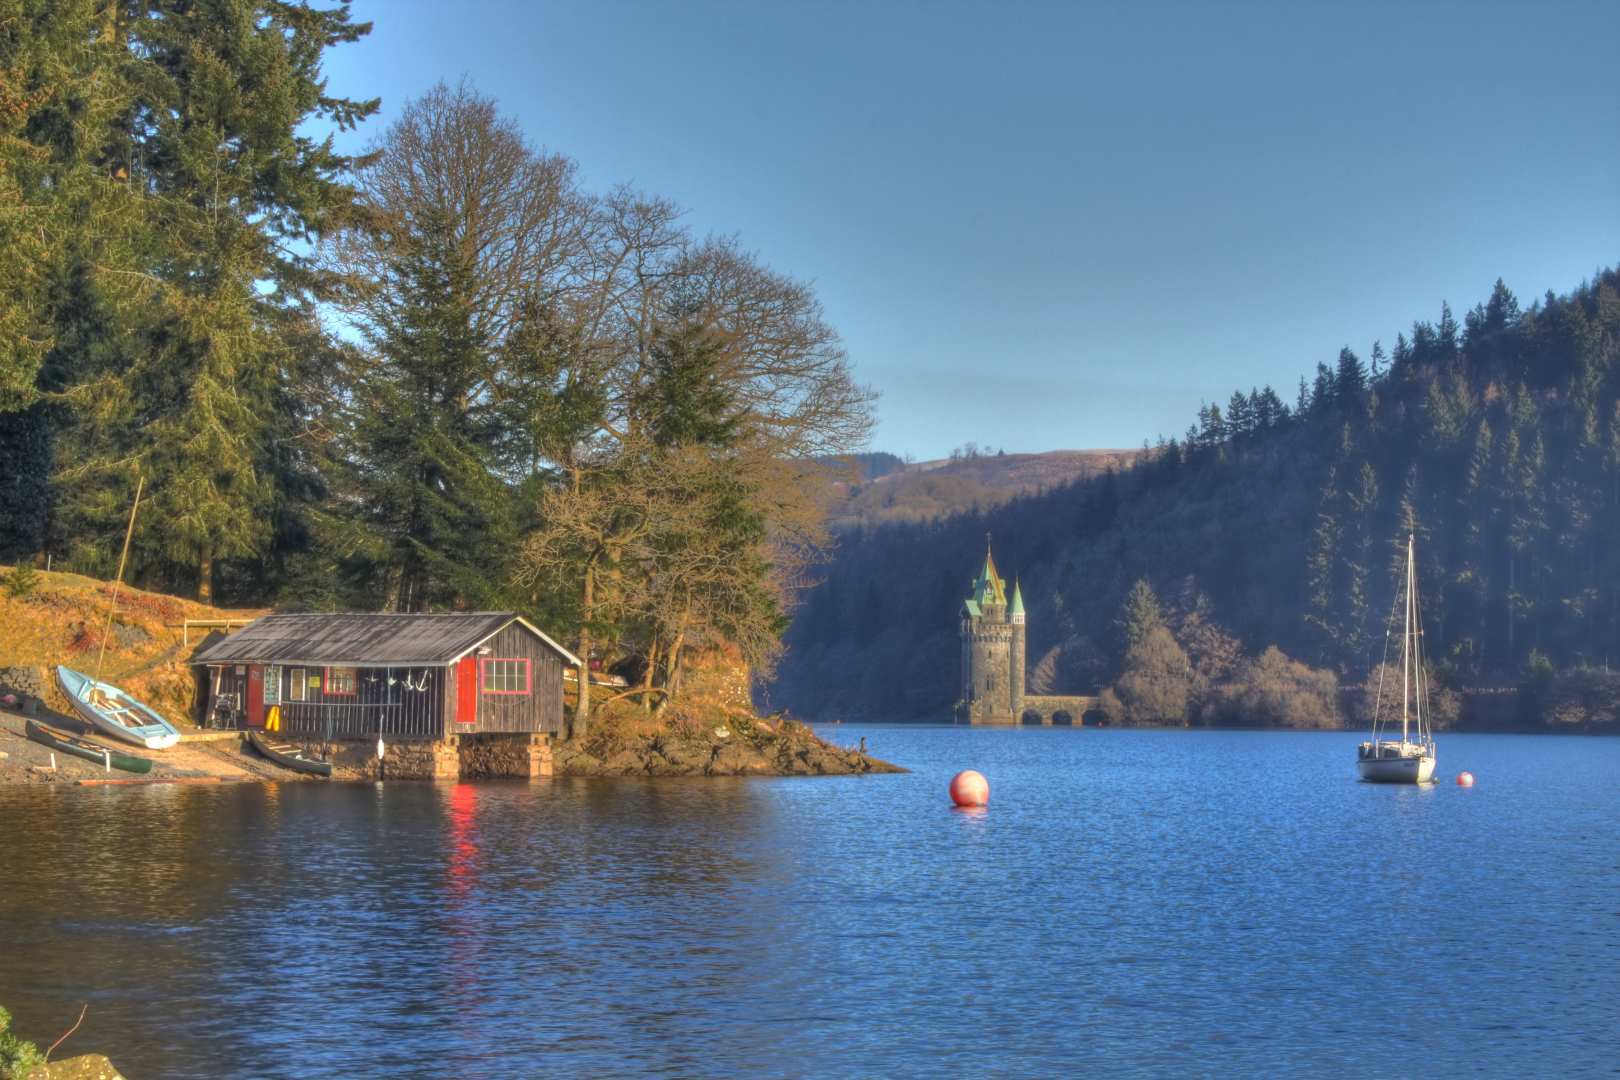 Lake Vyrnway in Wales